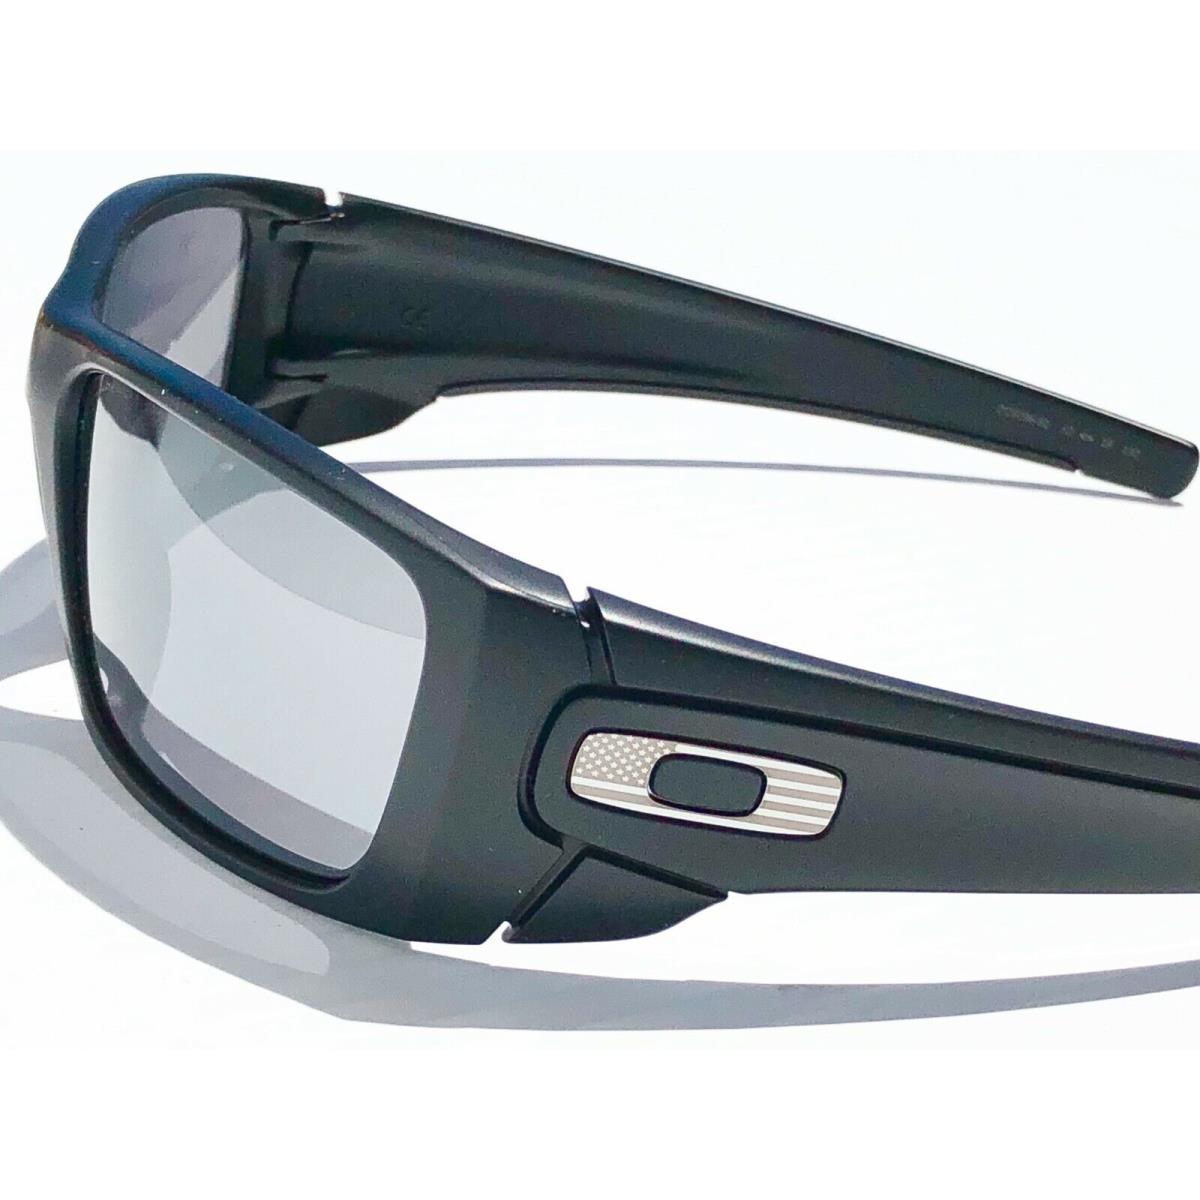 Oakley sunglasses Fuel Cell - Black Frame, Silver Lens 2